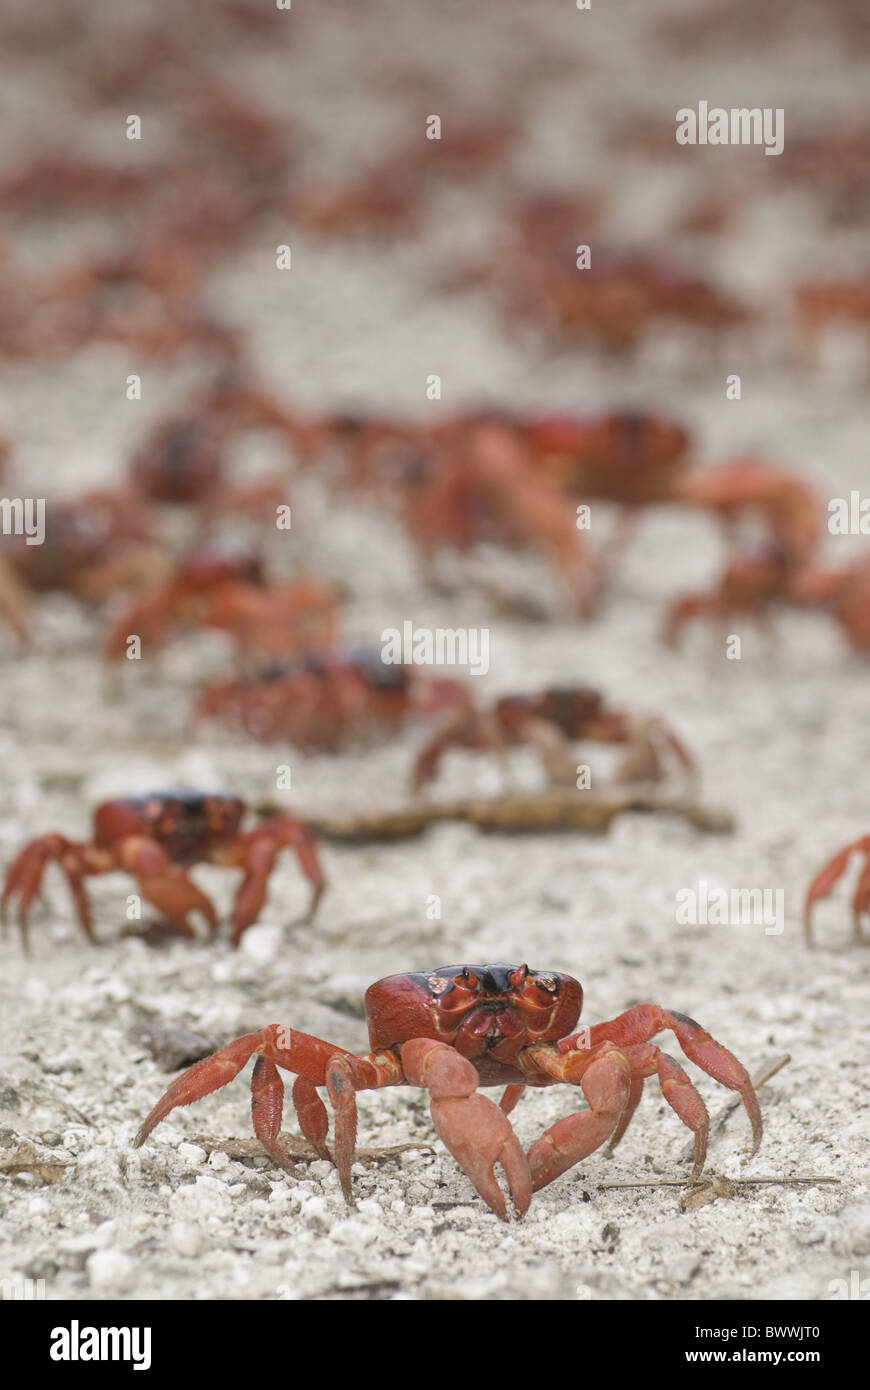 Red Crab Crustacean Claws Gecarcoidea natalis Christmas Island Australia animal animals crab crabs crustacean crustaceans Stock Photo